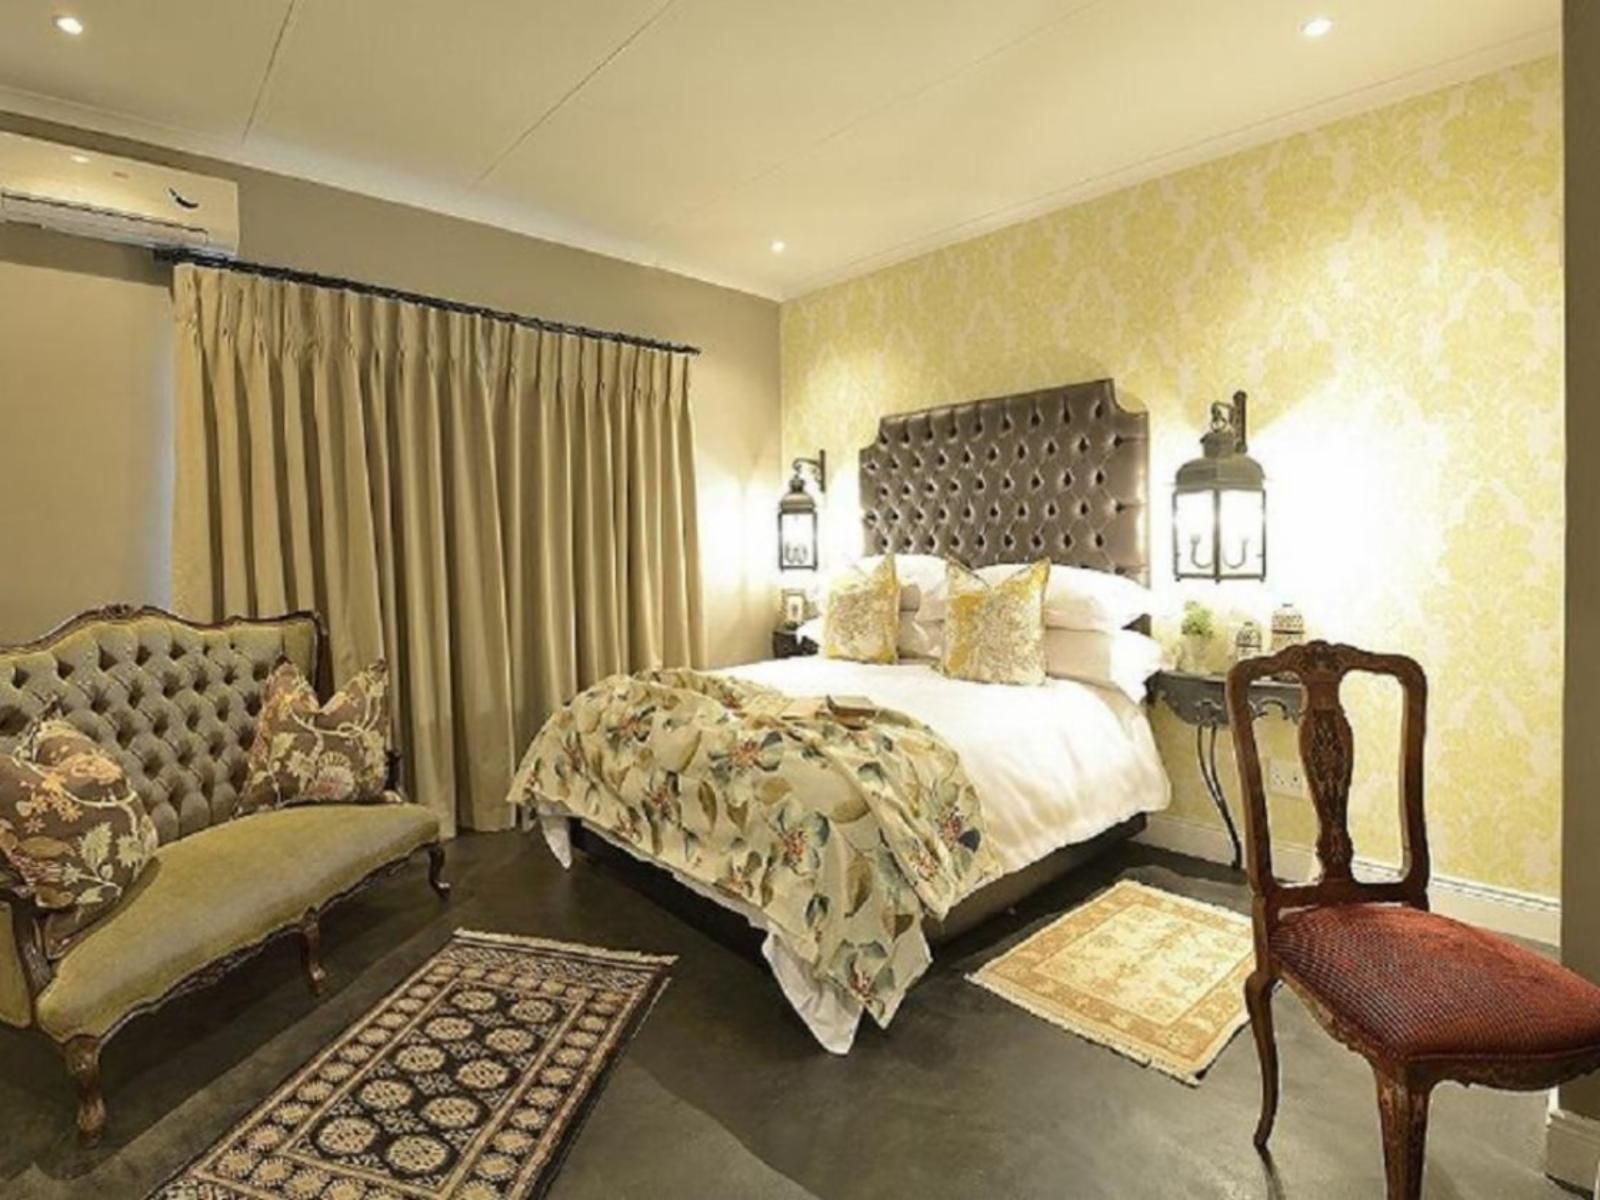 Duke And Duchess Boutique Hotel Waterkloof Park Pretoria Tshwane Gauteng South Africa Sepia Tones, Bedroom